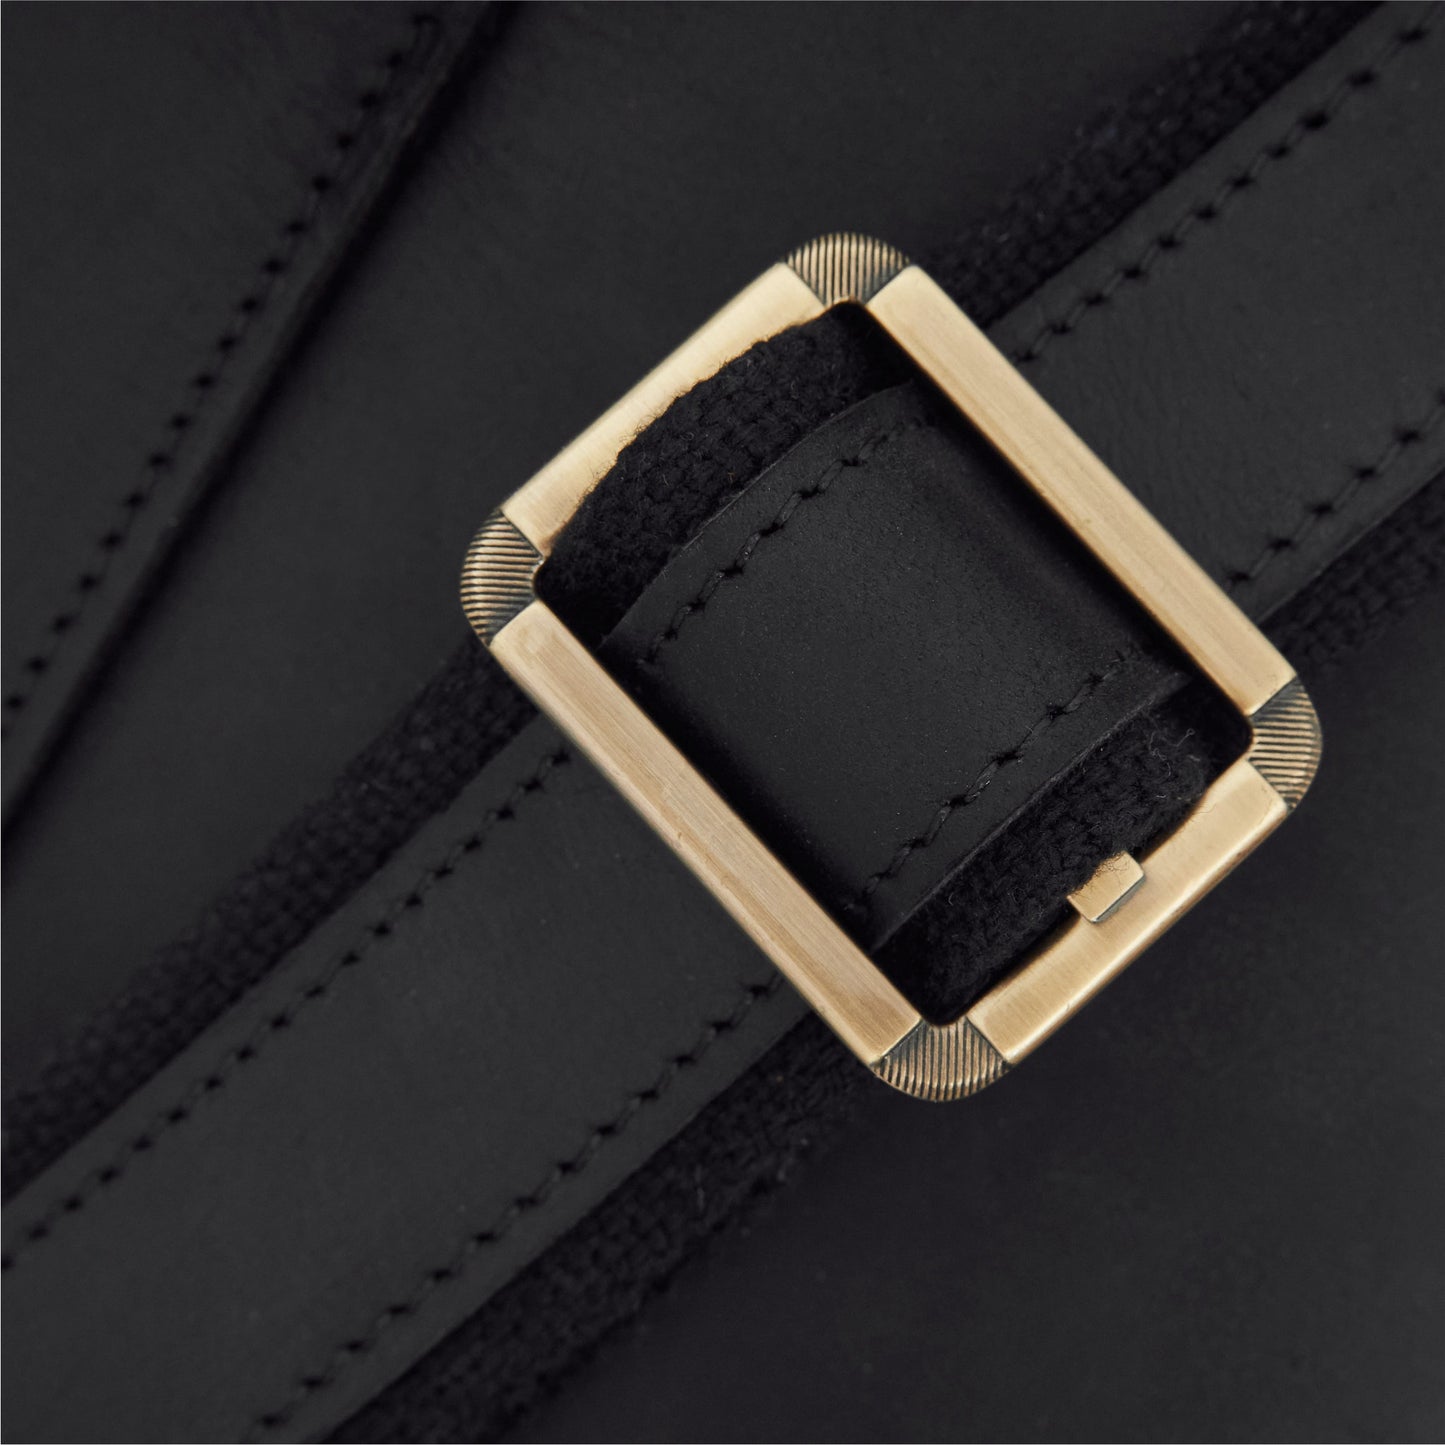 Luxorro Leather Briefcase Laptop Bag for Men – Soft, Leather Messenger Bag, Last's a Lifetime – Lifetime Warranty – Fits 15-Inch, Black